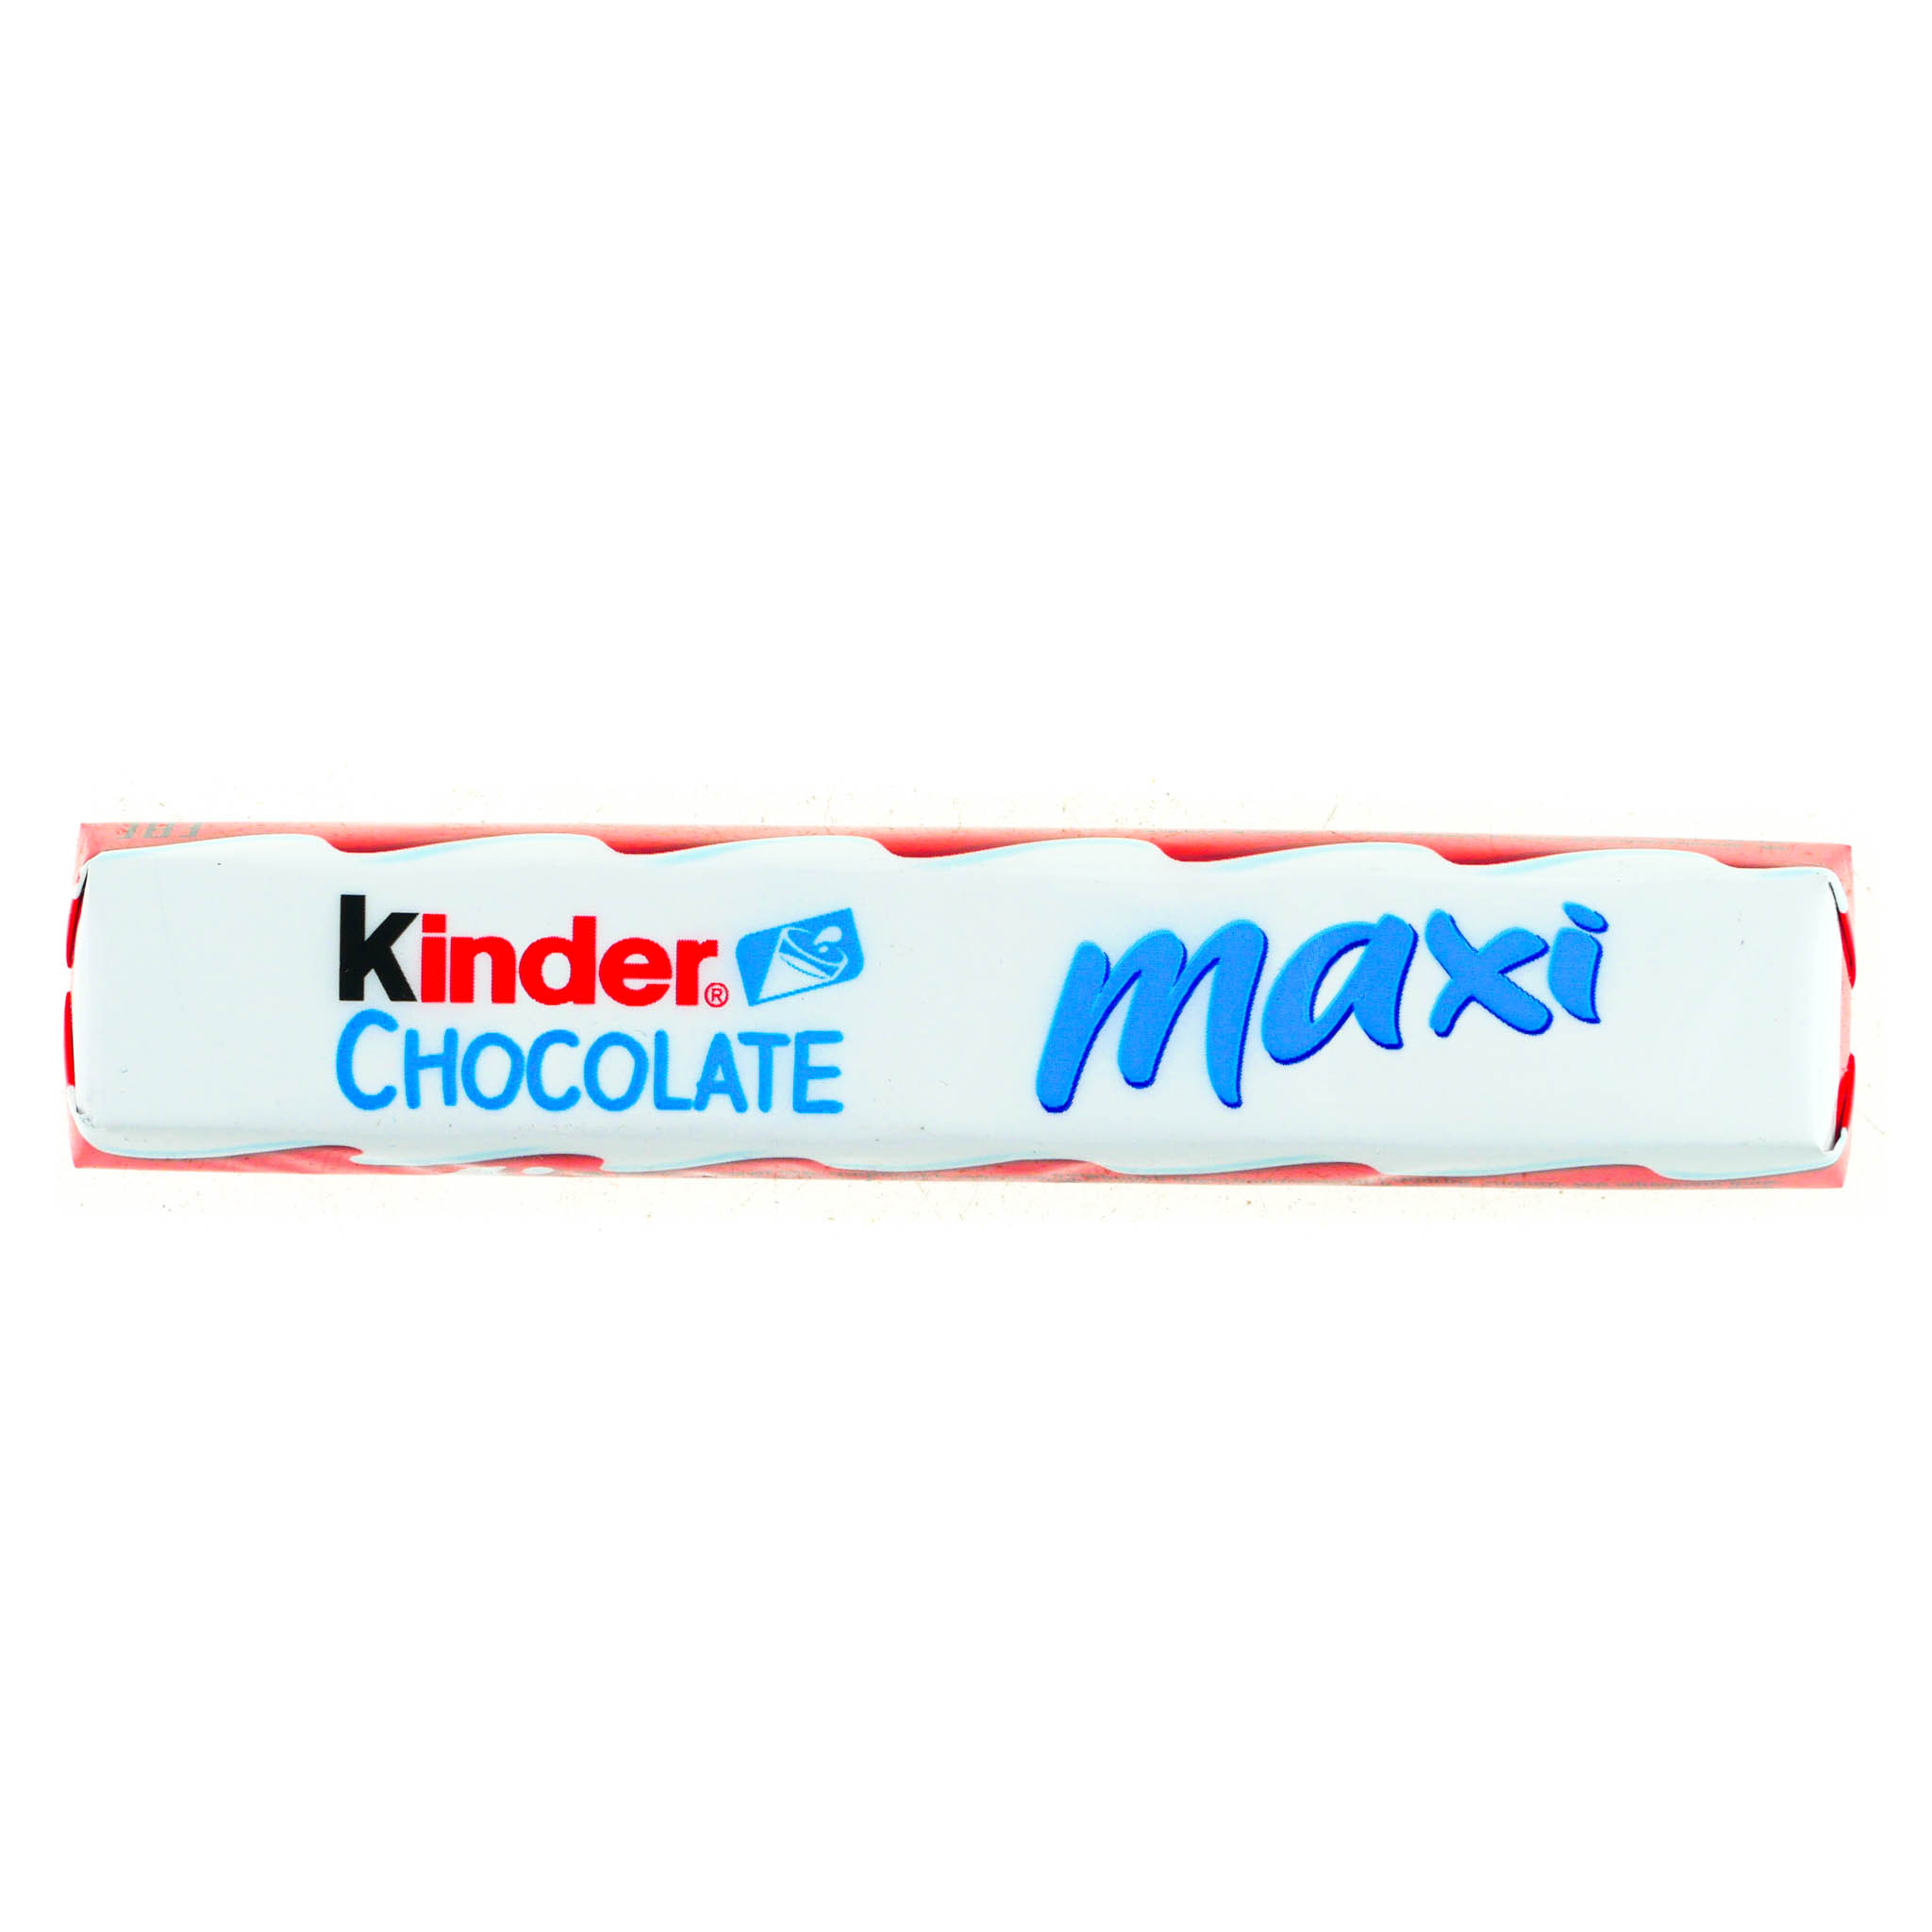 Киндер шоколад грамм. Киндер шоколад макси 21 гр. Шоколад kinder Chocolate Maxi молочный 21 г. ШОК батончик kinder Maxi 21г. Киндер шоколад макси 36*8 21г, шт.